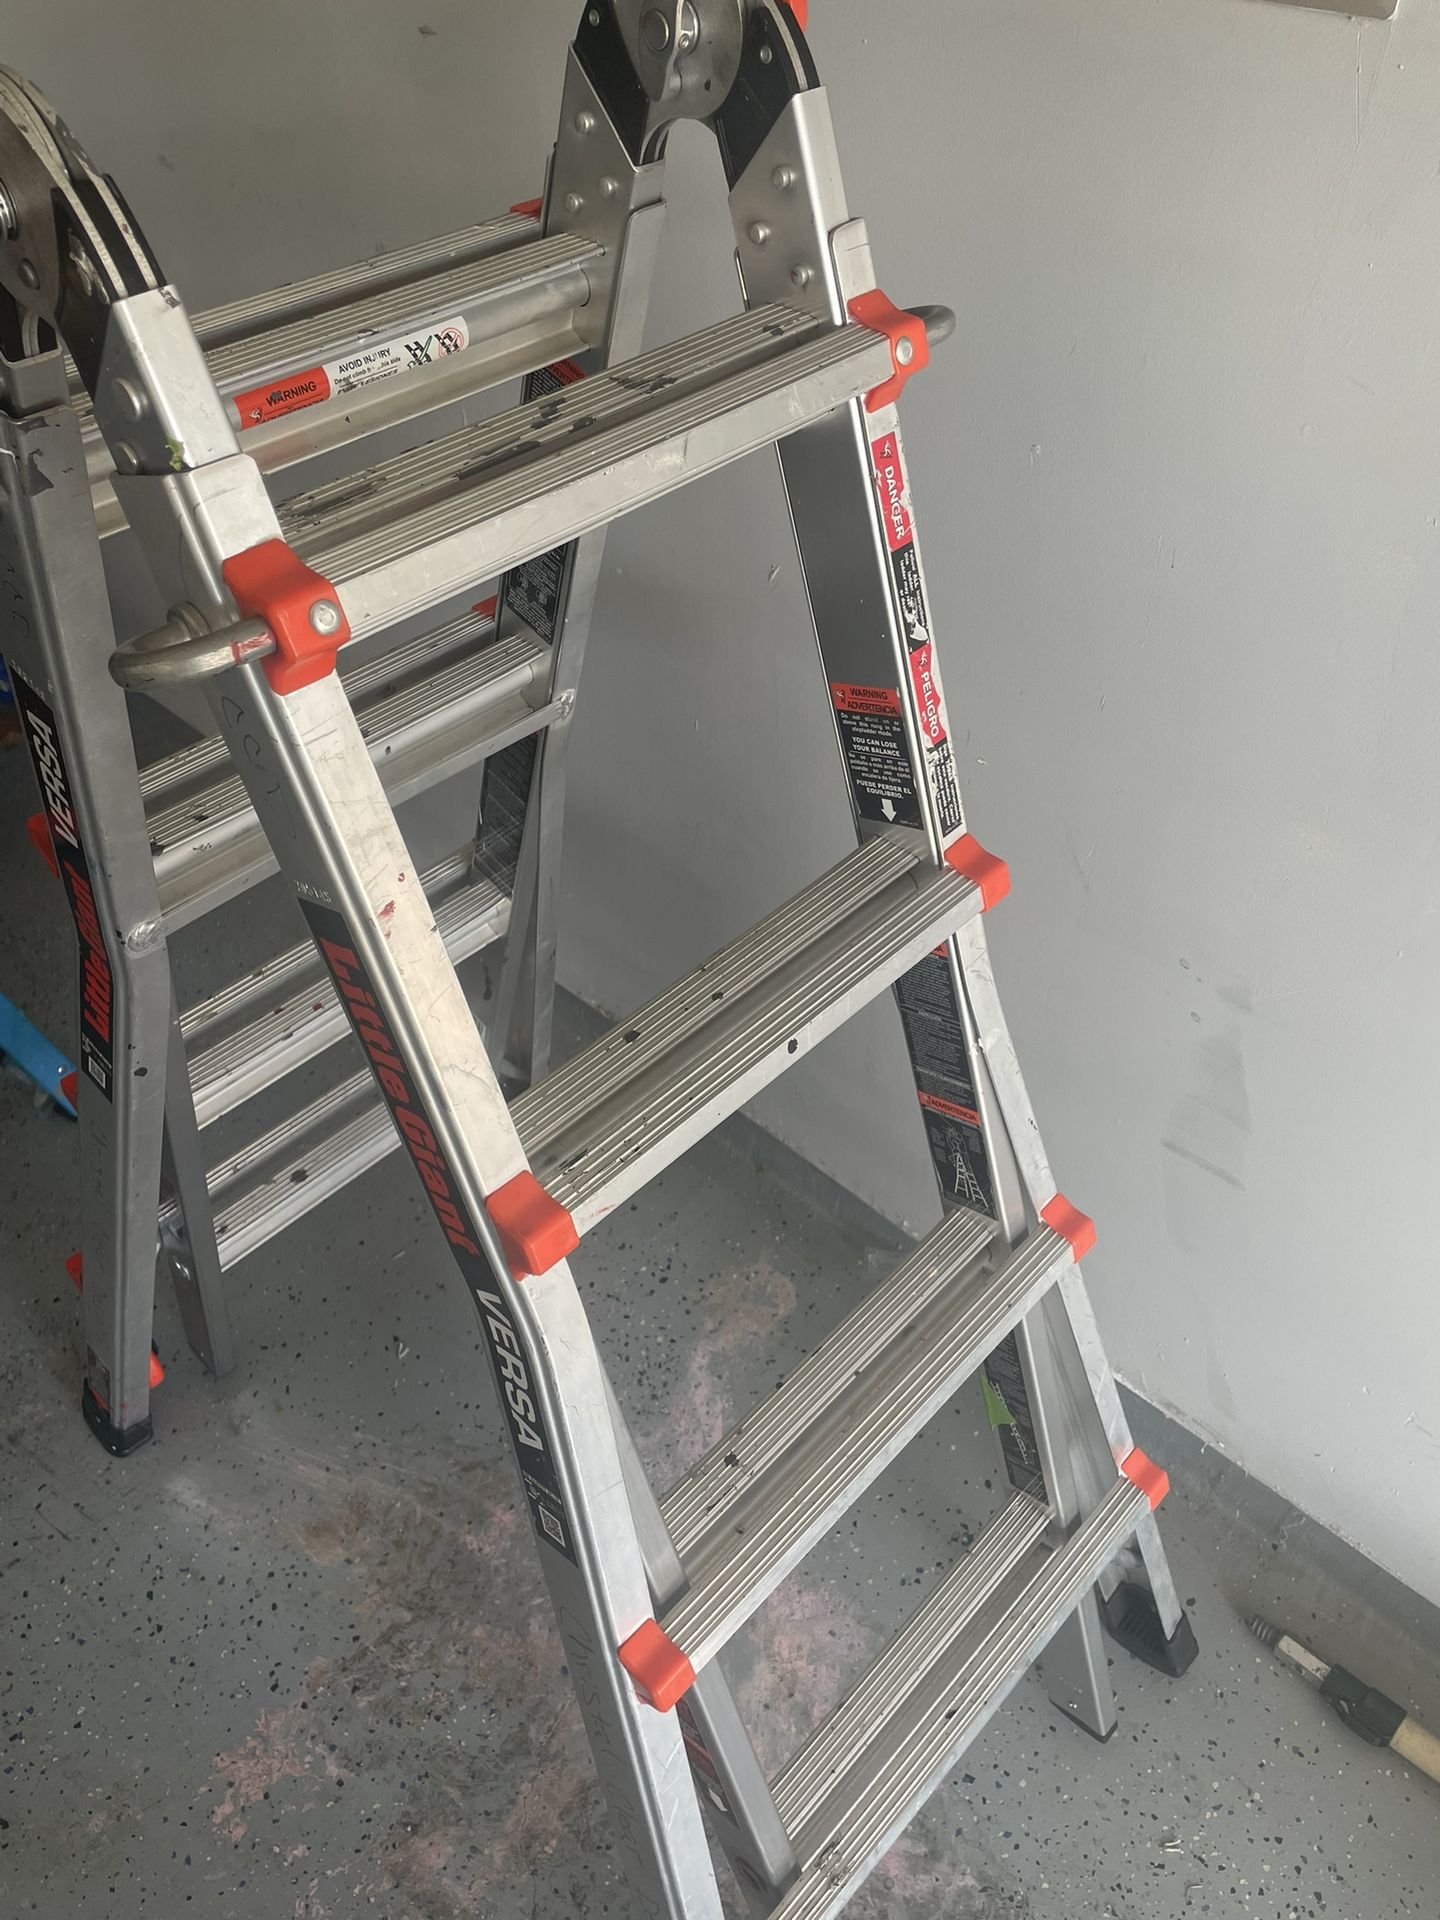 15’ Multi position Ladder 